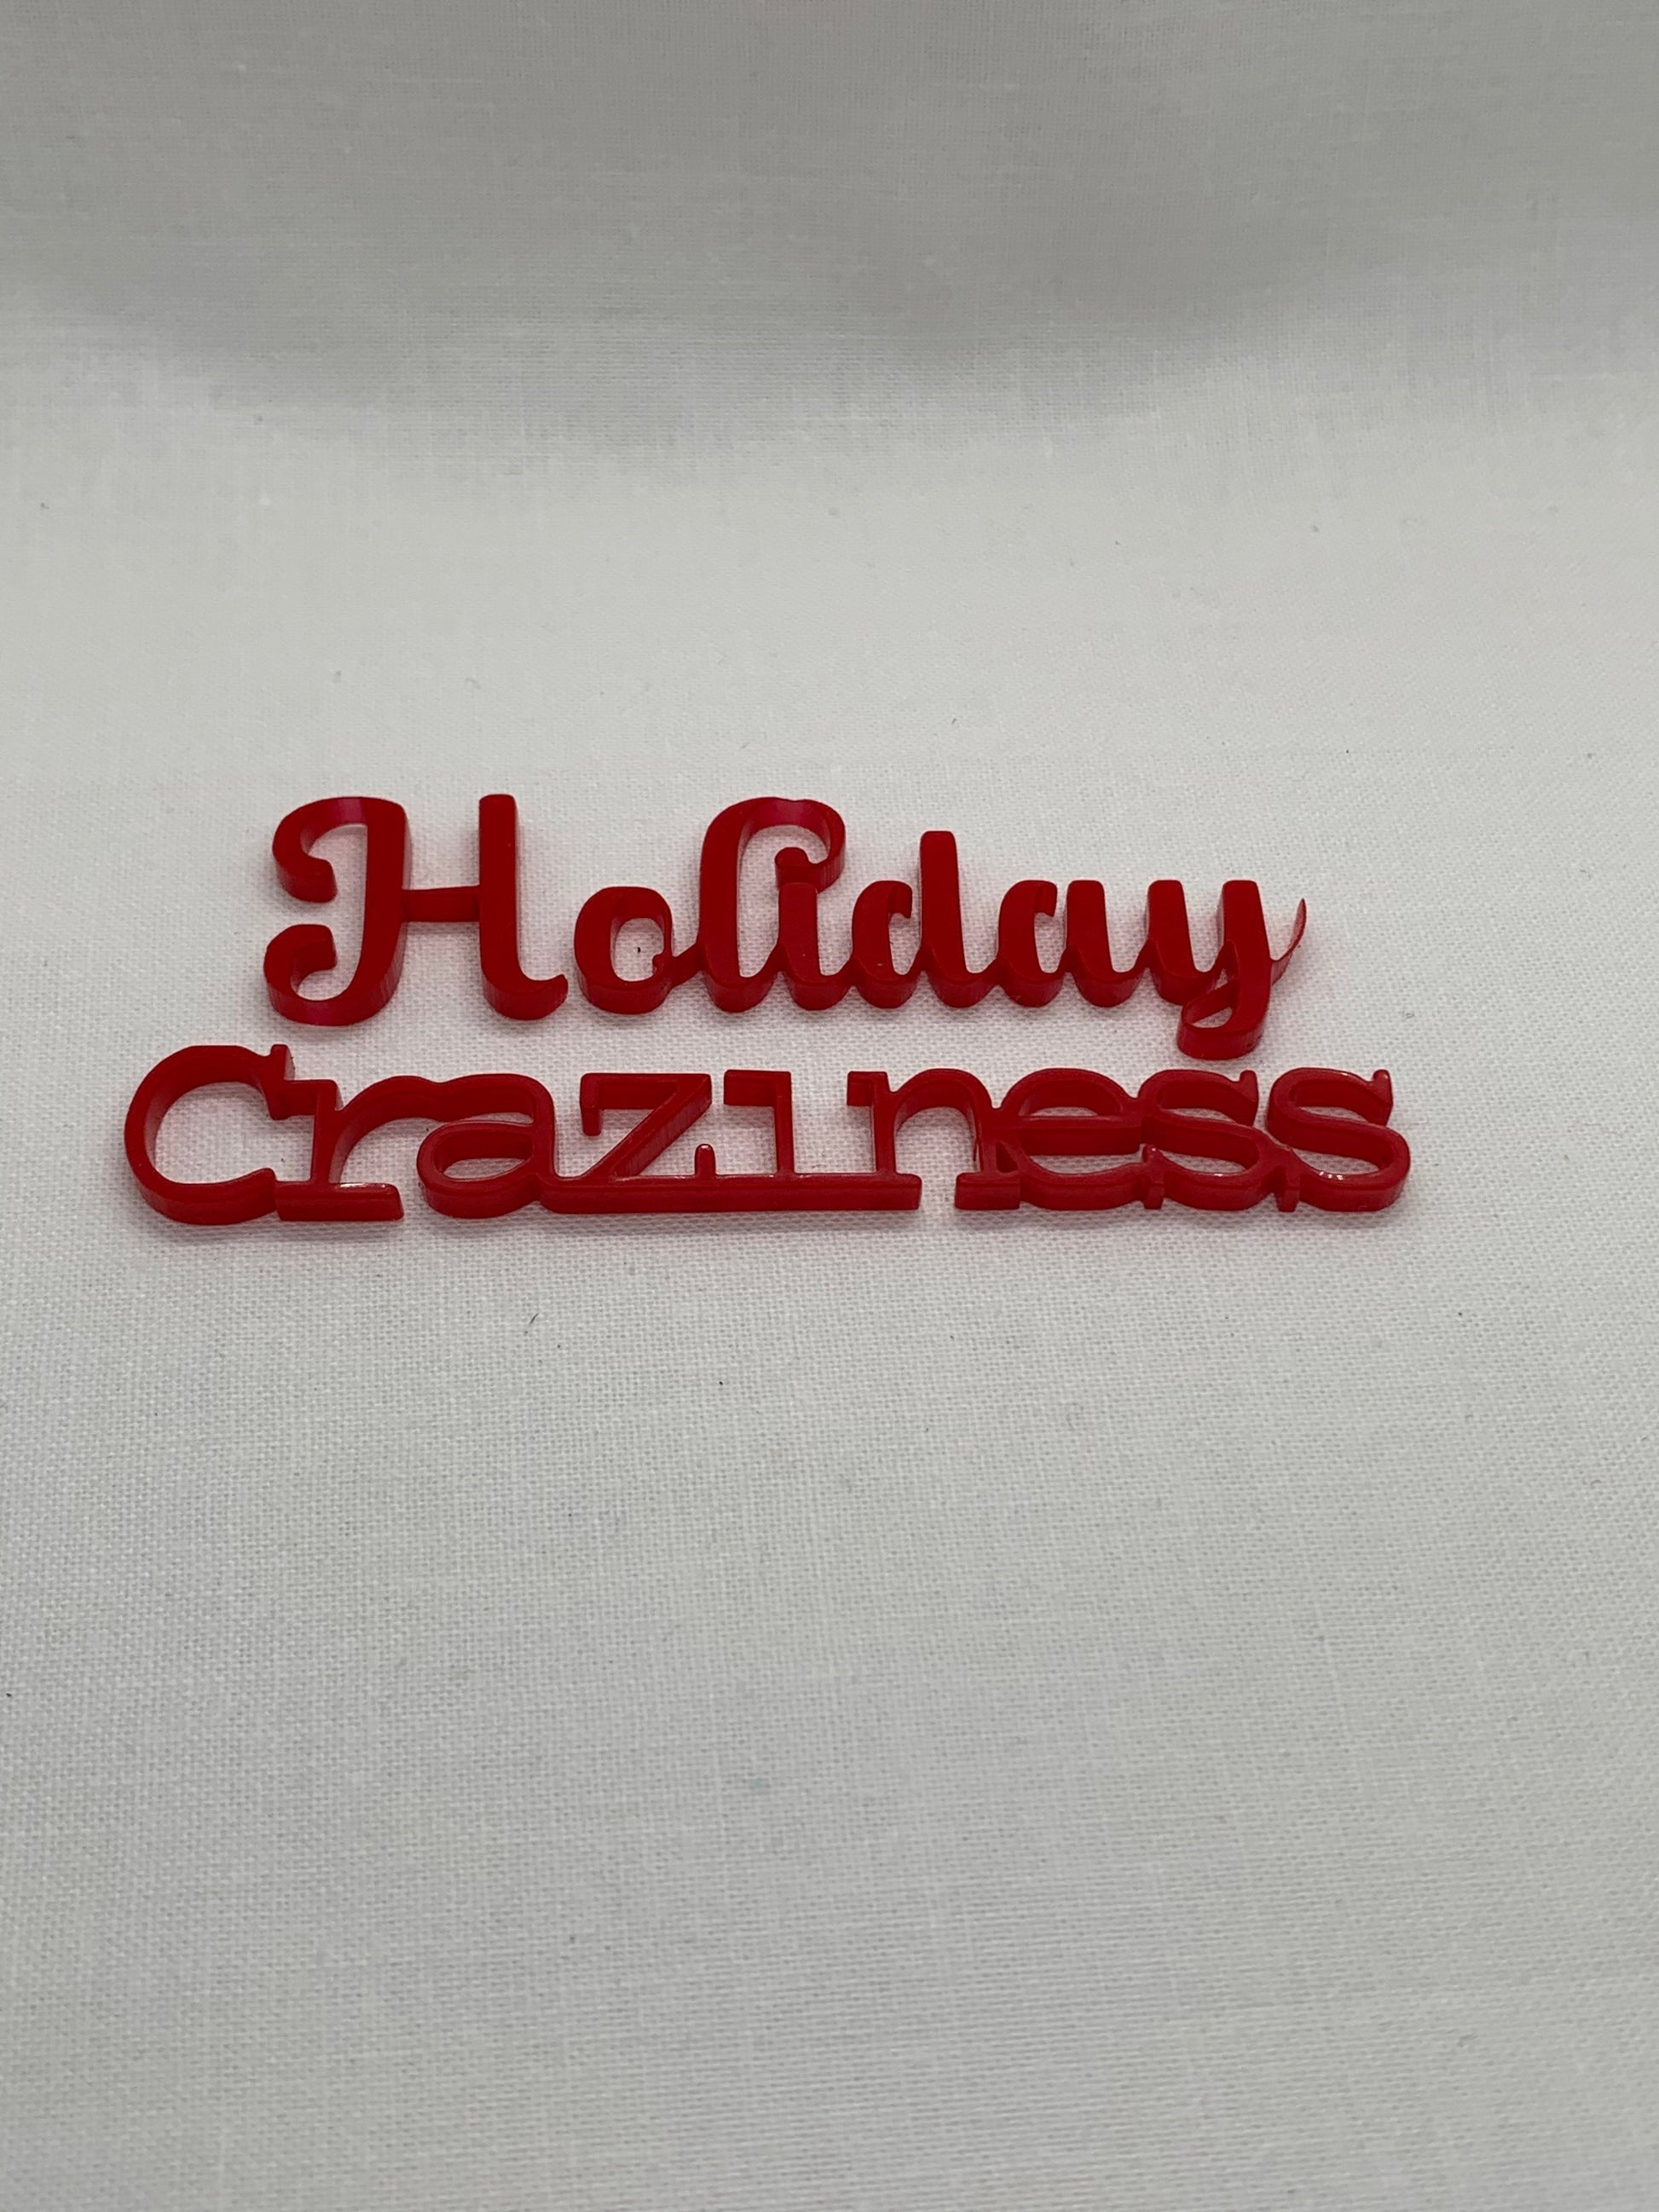 Holiday craziness - Creative Designs By Kari